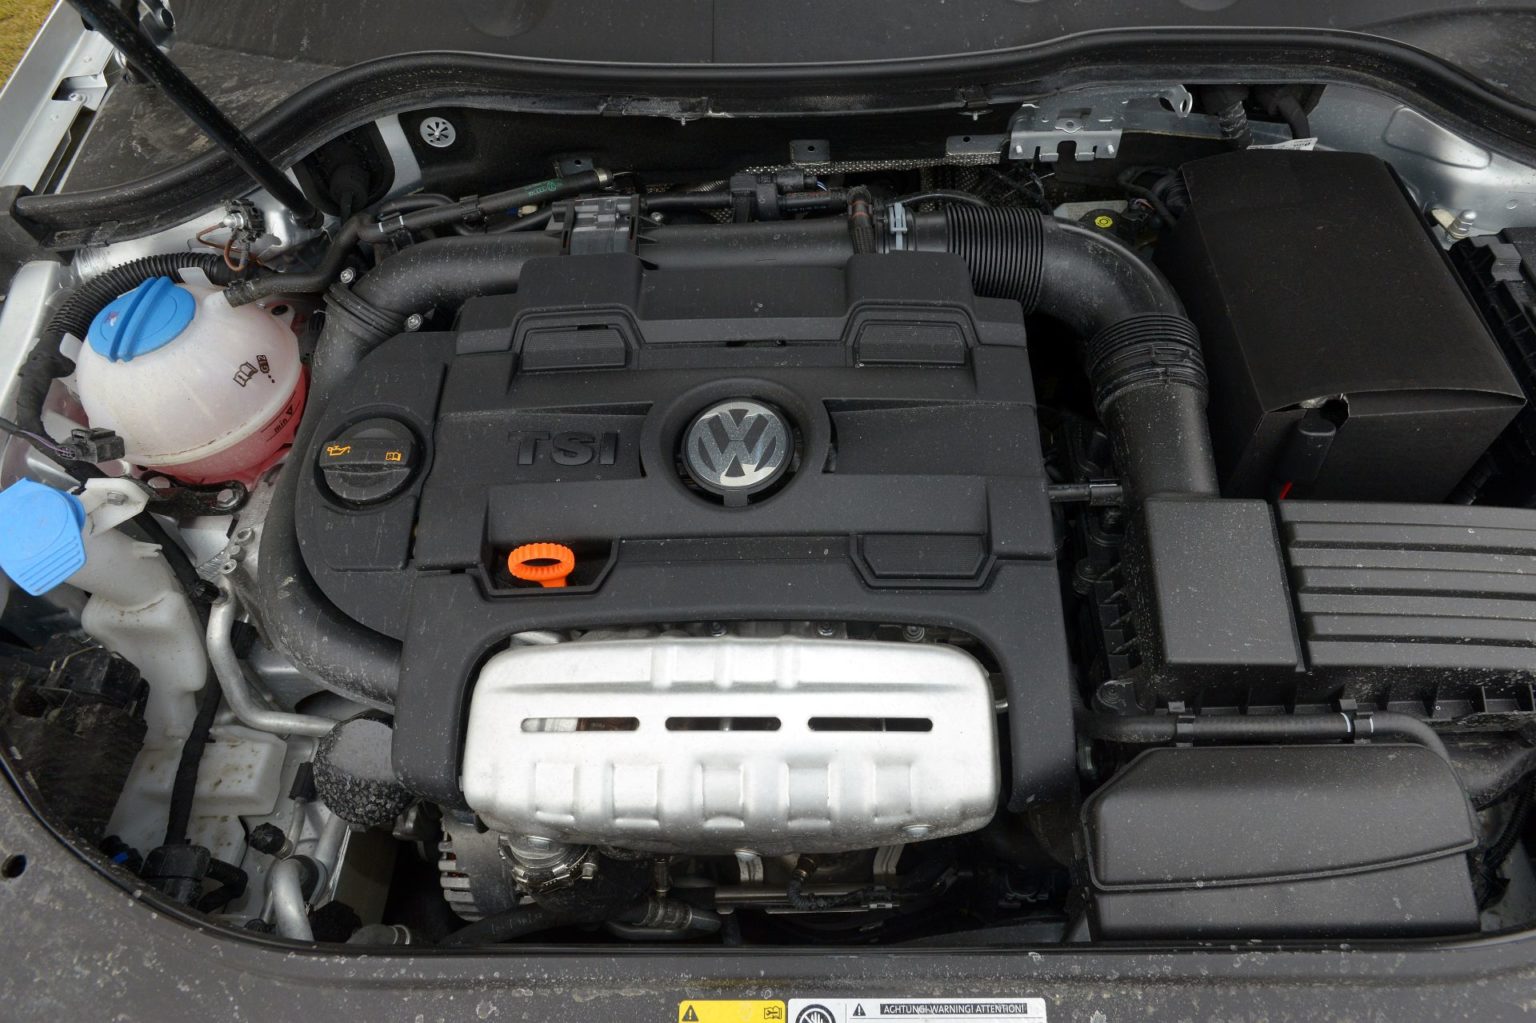 Używany Volkswagen Passat B7 (20102014) opinie, dane